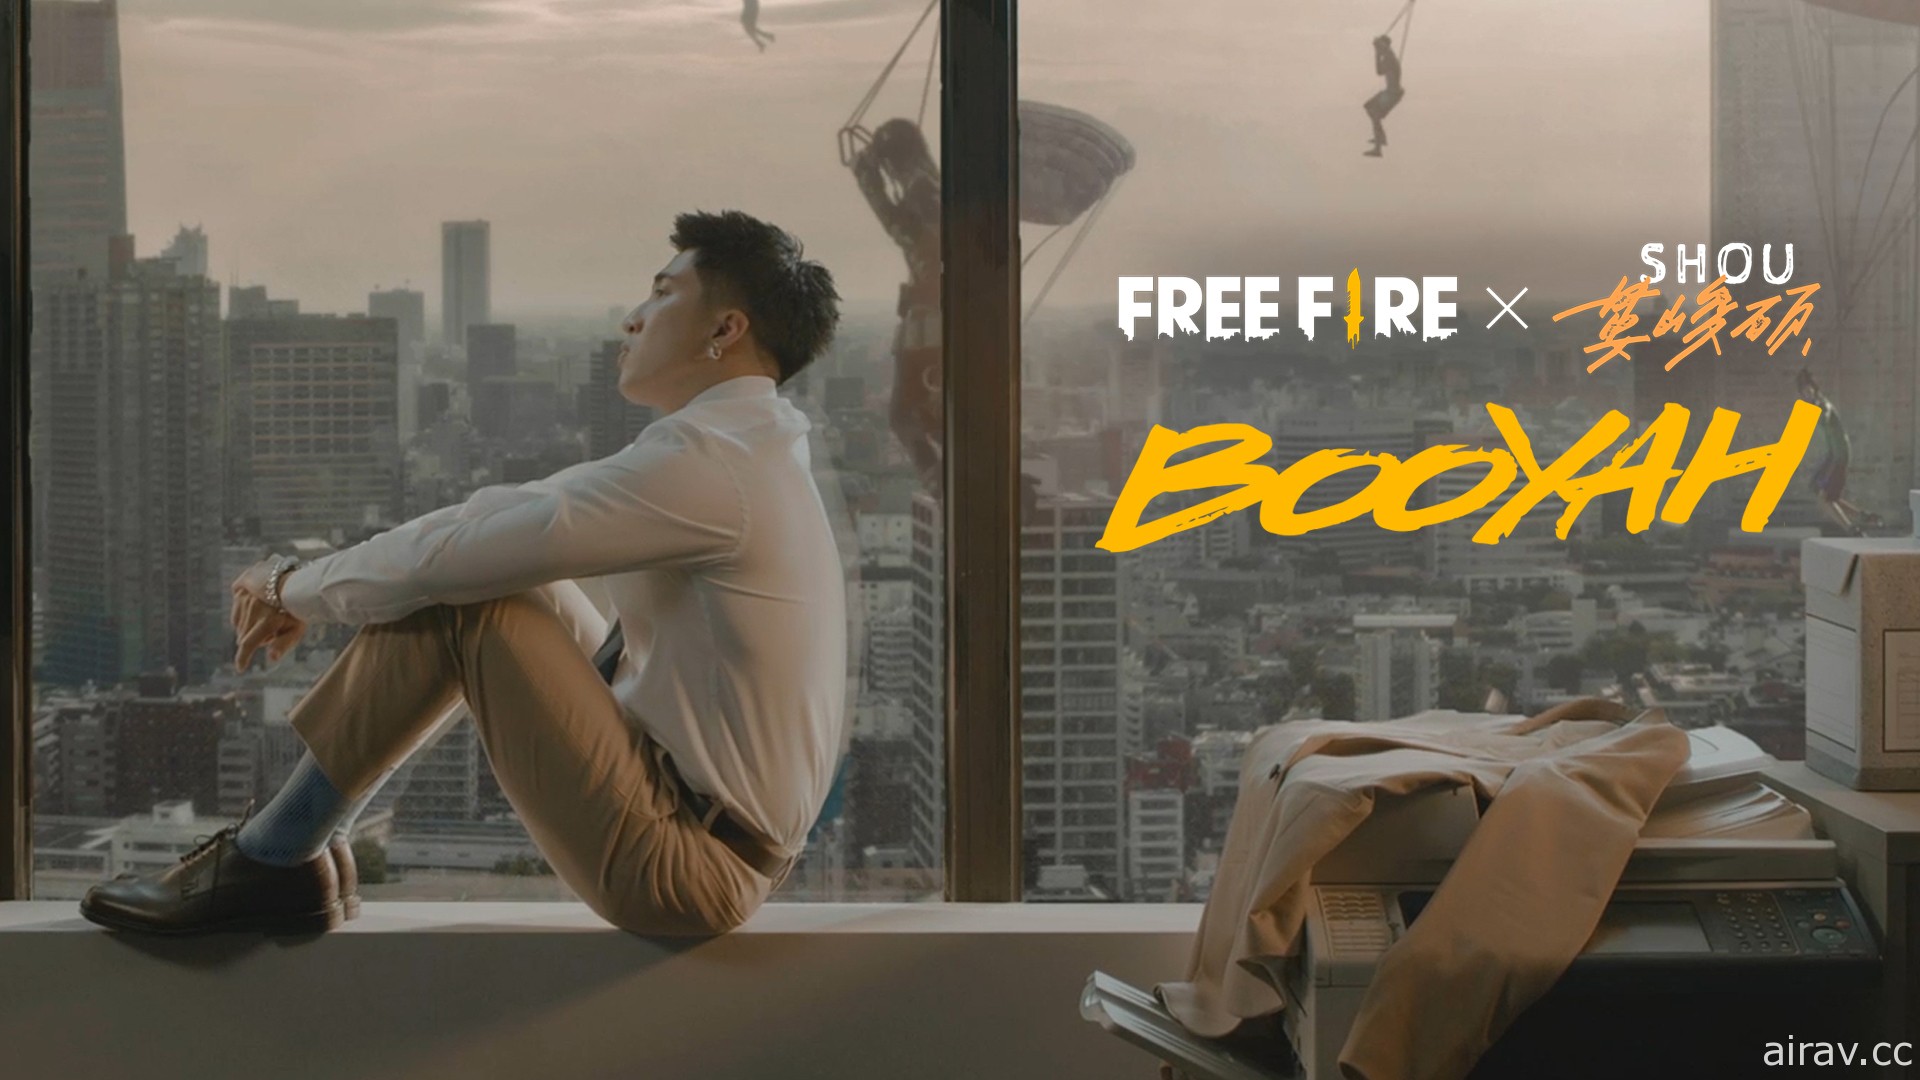 《Free Fire - 我要活下去》公開跨界攜手饒舌歌手婁峻碩夏日主題曲「Booyah」